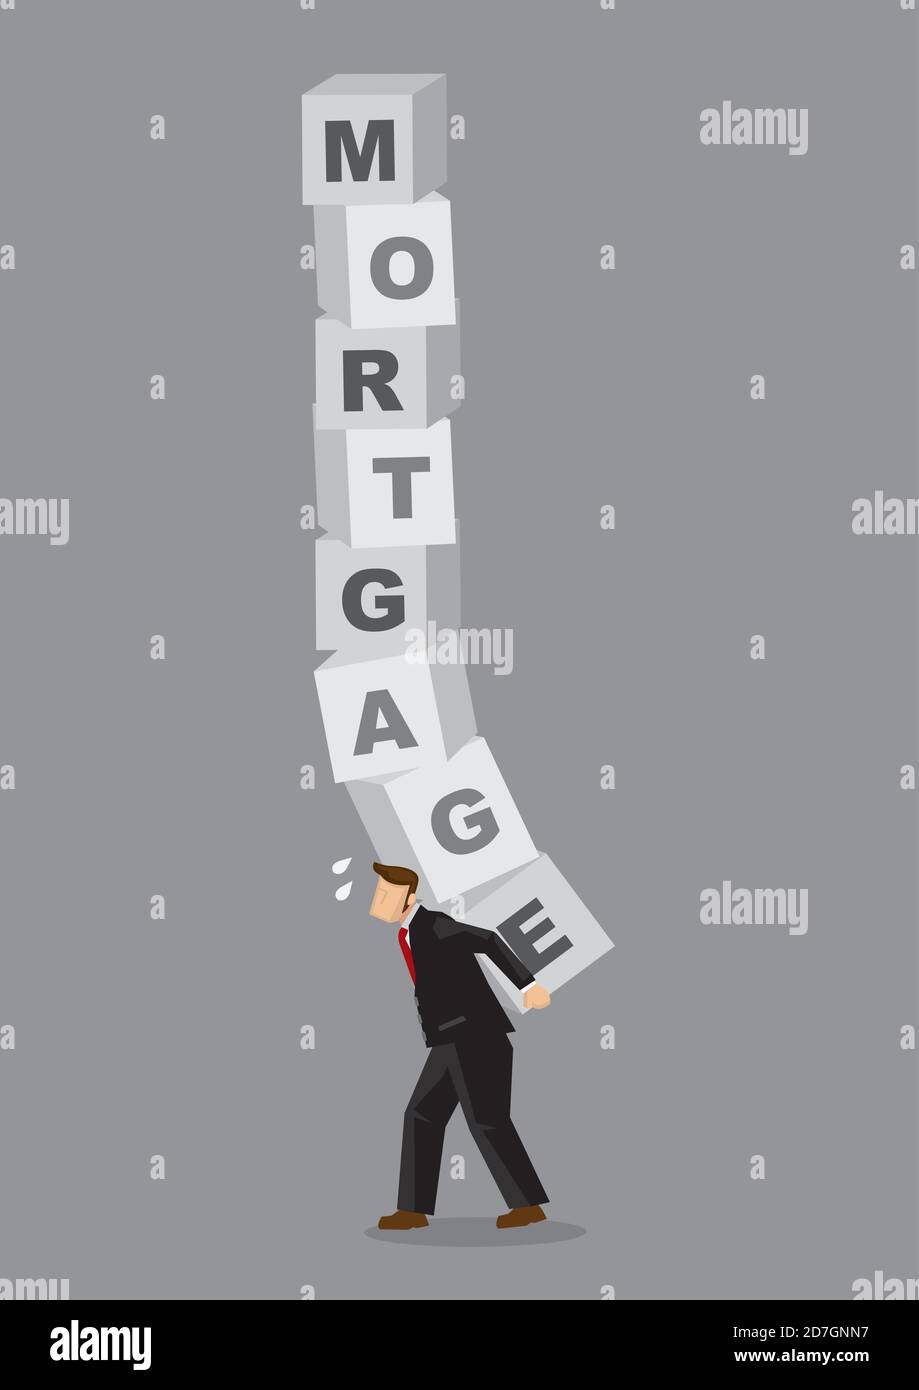 Cartoon businessman carrying heavy blocks that read Mortgage on his back. Creative cartoon vector illustration on metaphor for heavy burden of mortgag Stock Vector